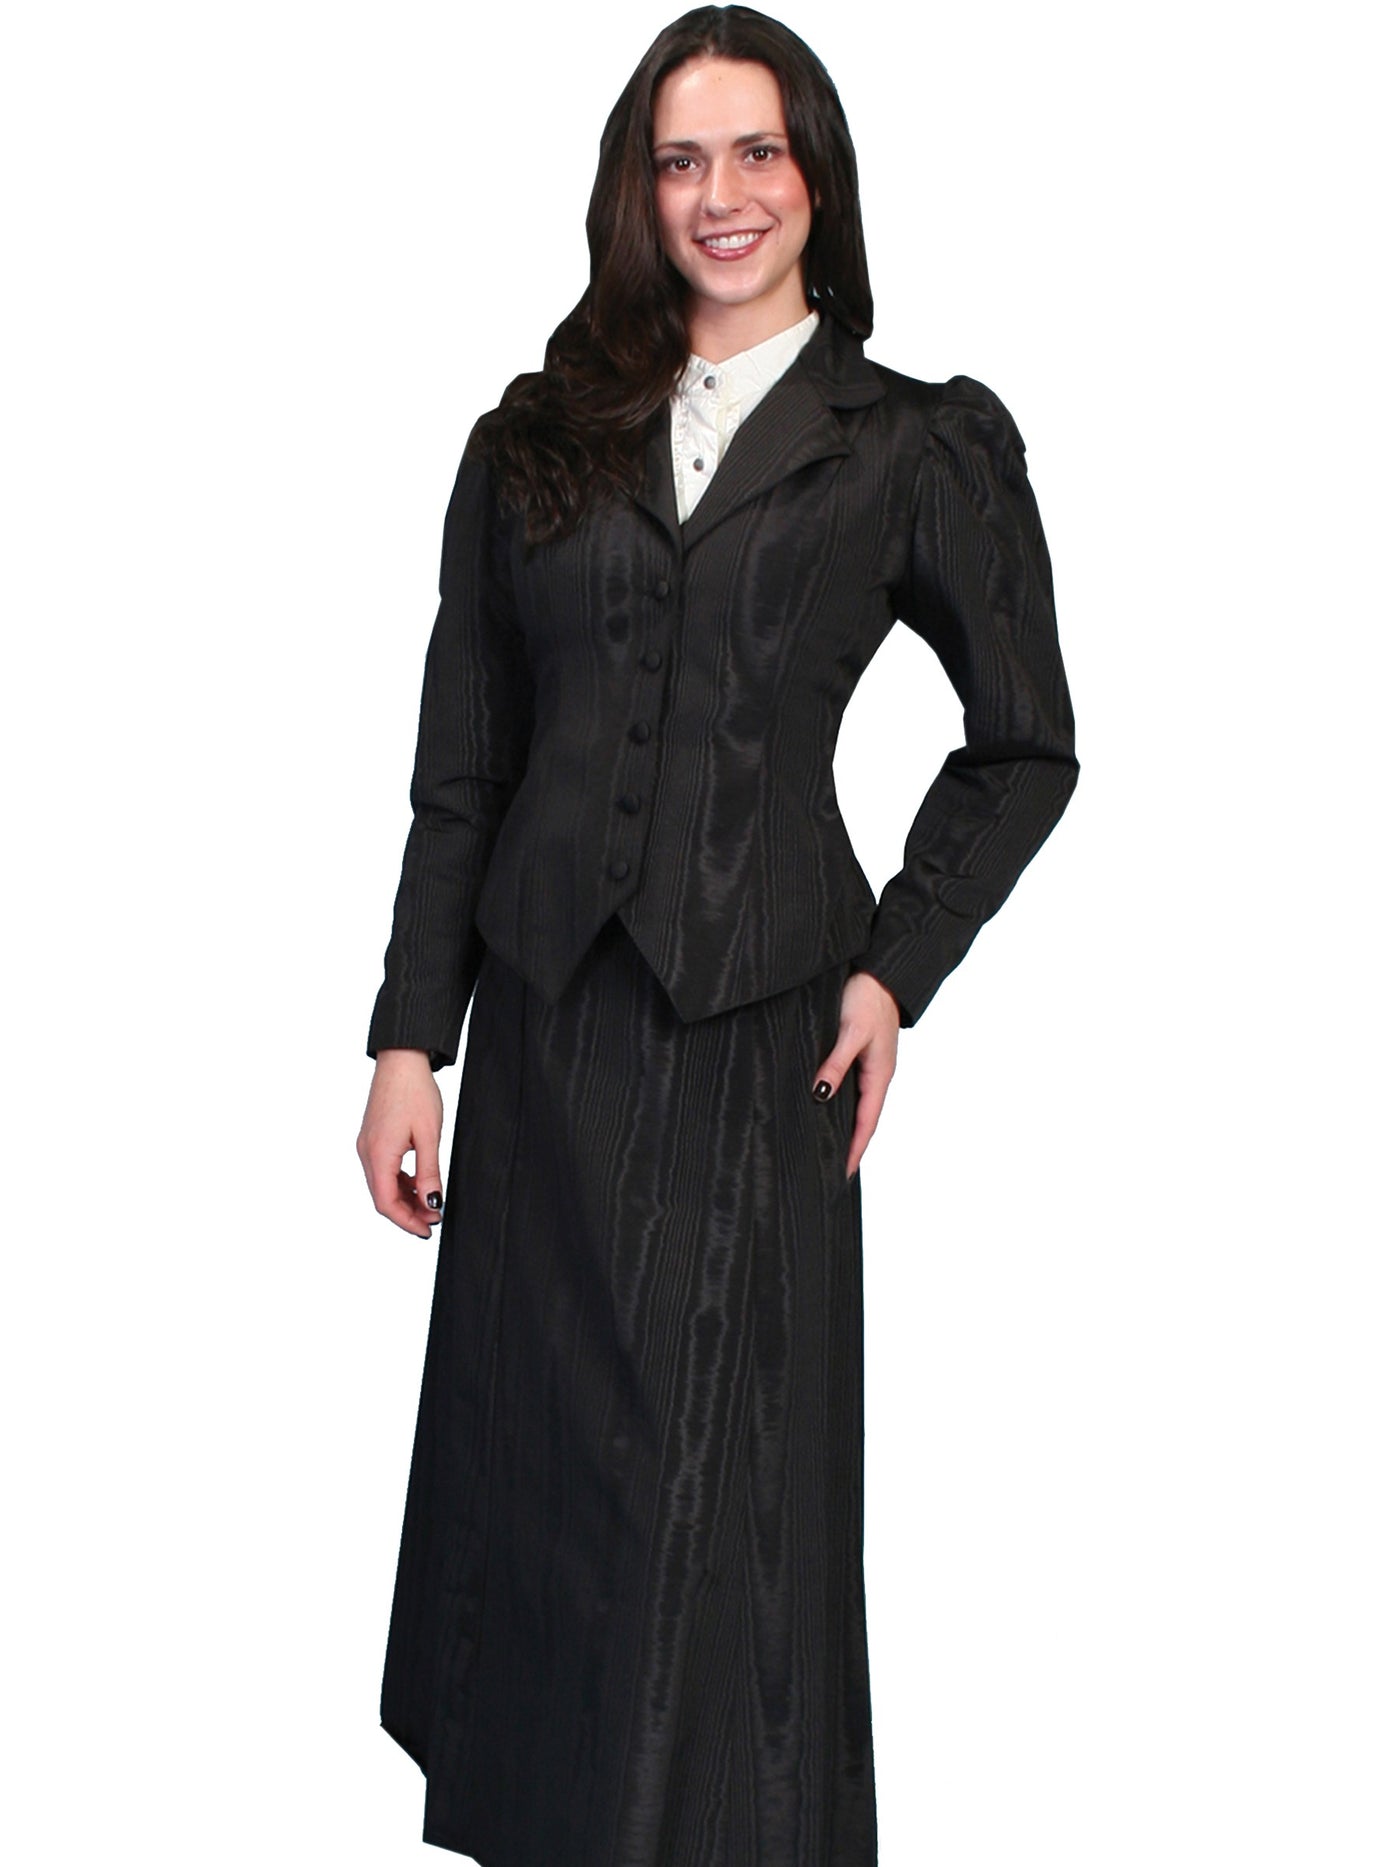 Victorian Style Five Gore Walking Skirt in Black